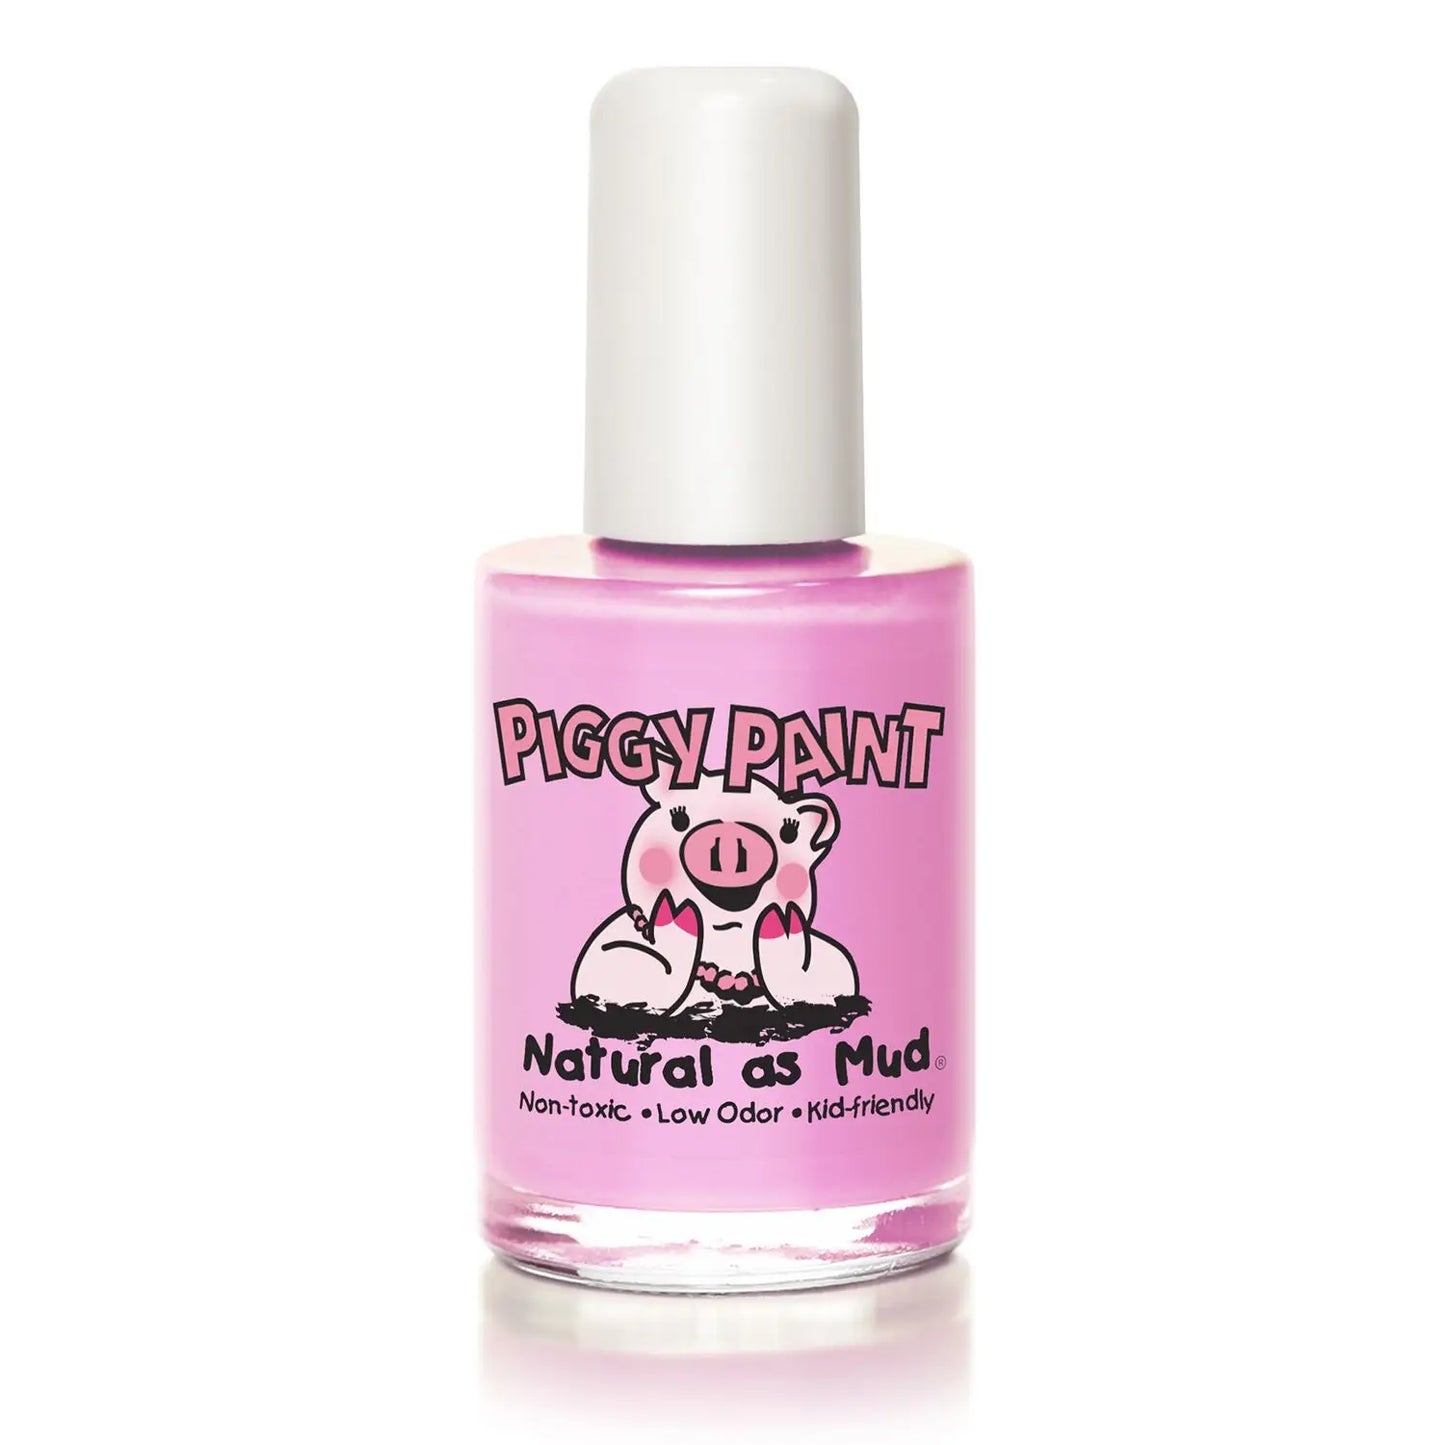 Pinkie Promise Nail Polish